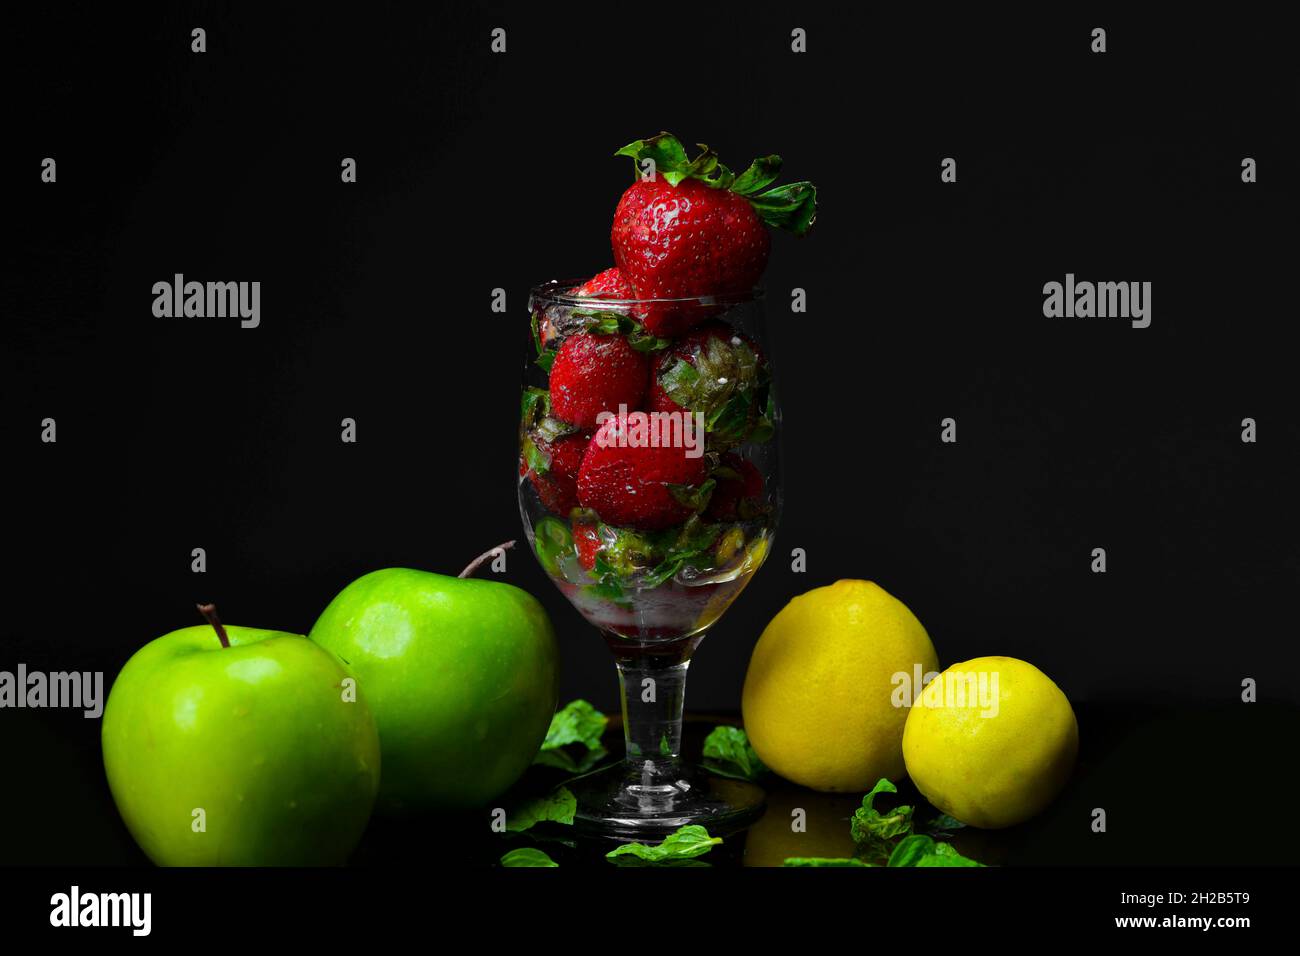 Erdbeere, grüner Apfel und Zitrone Stockfoto